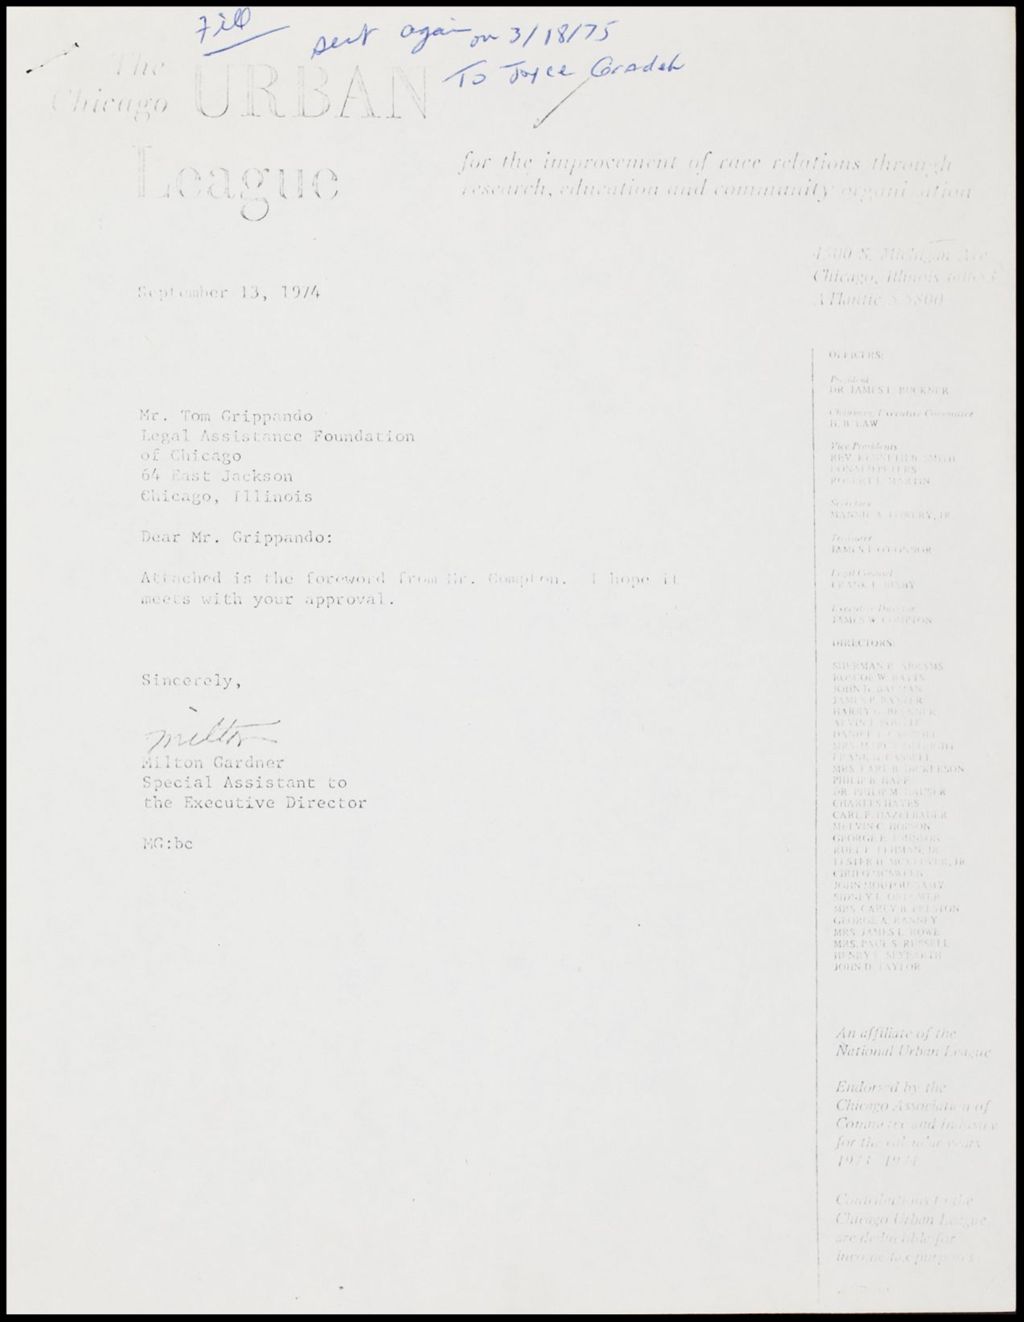 Miniature of Legal Assistance, 1975 (Folder II-2165)